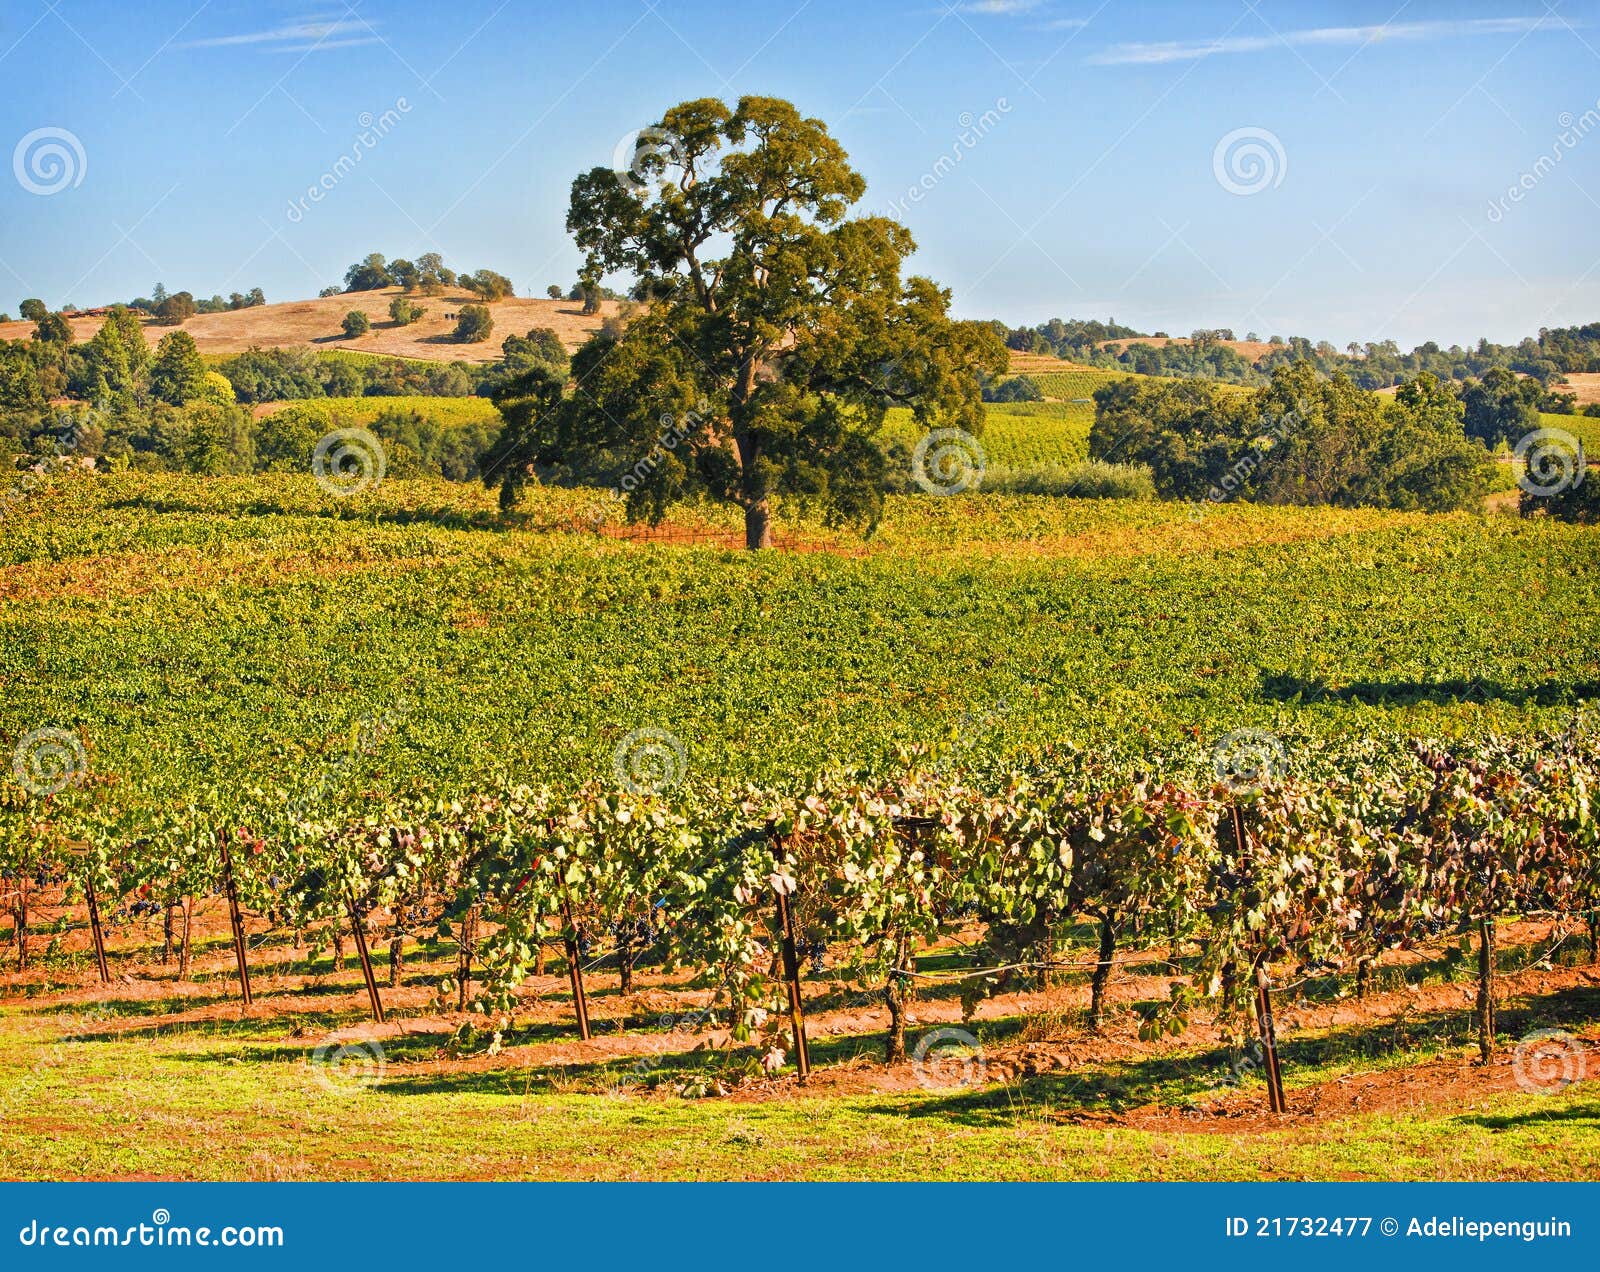 amador county vineyard, california